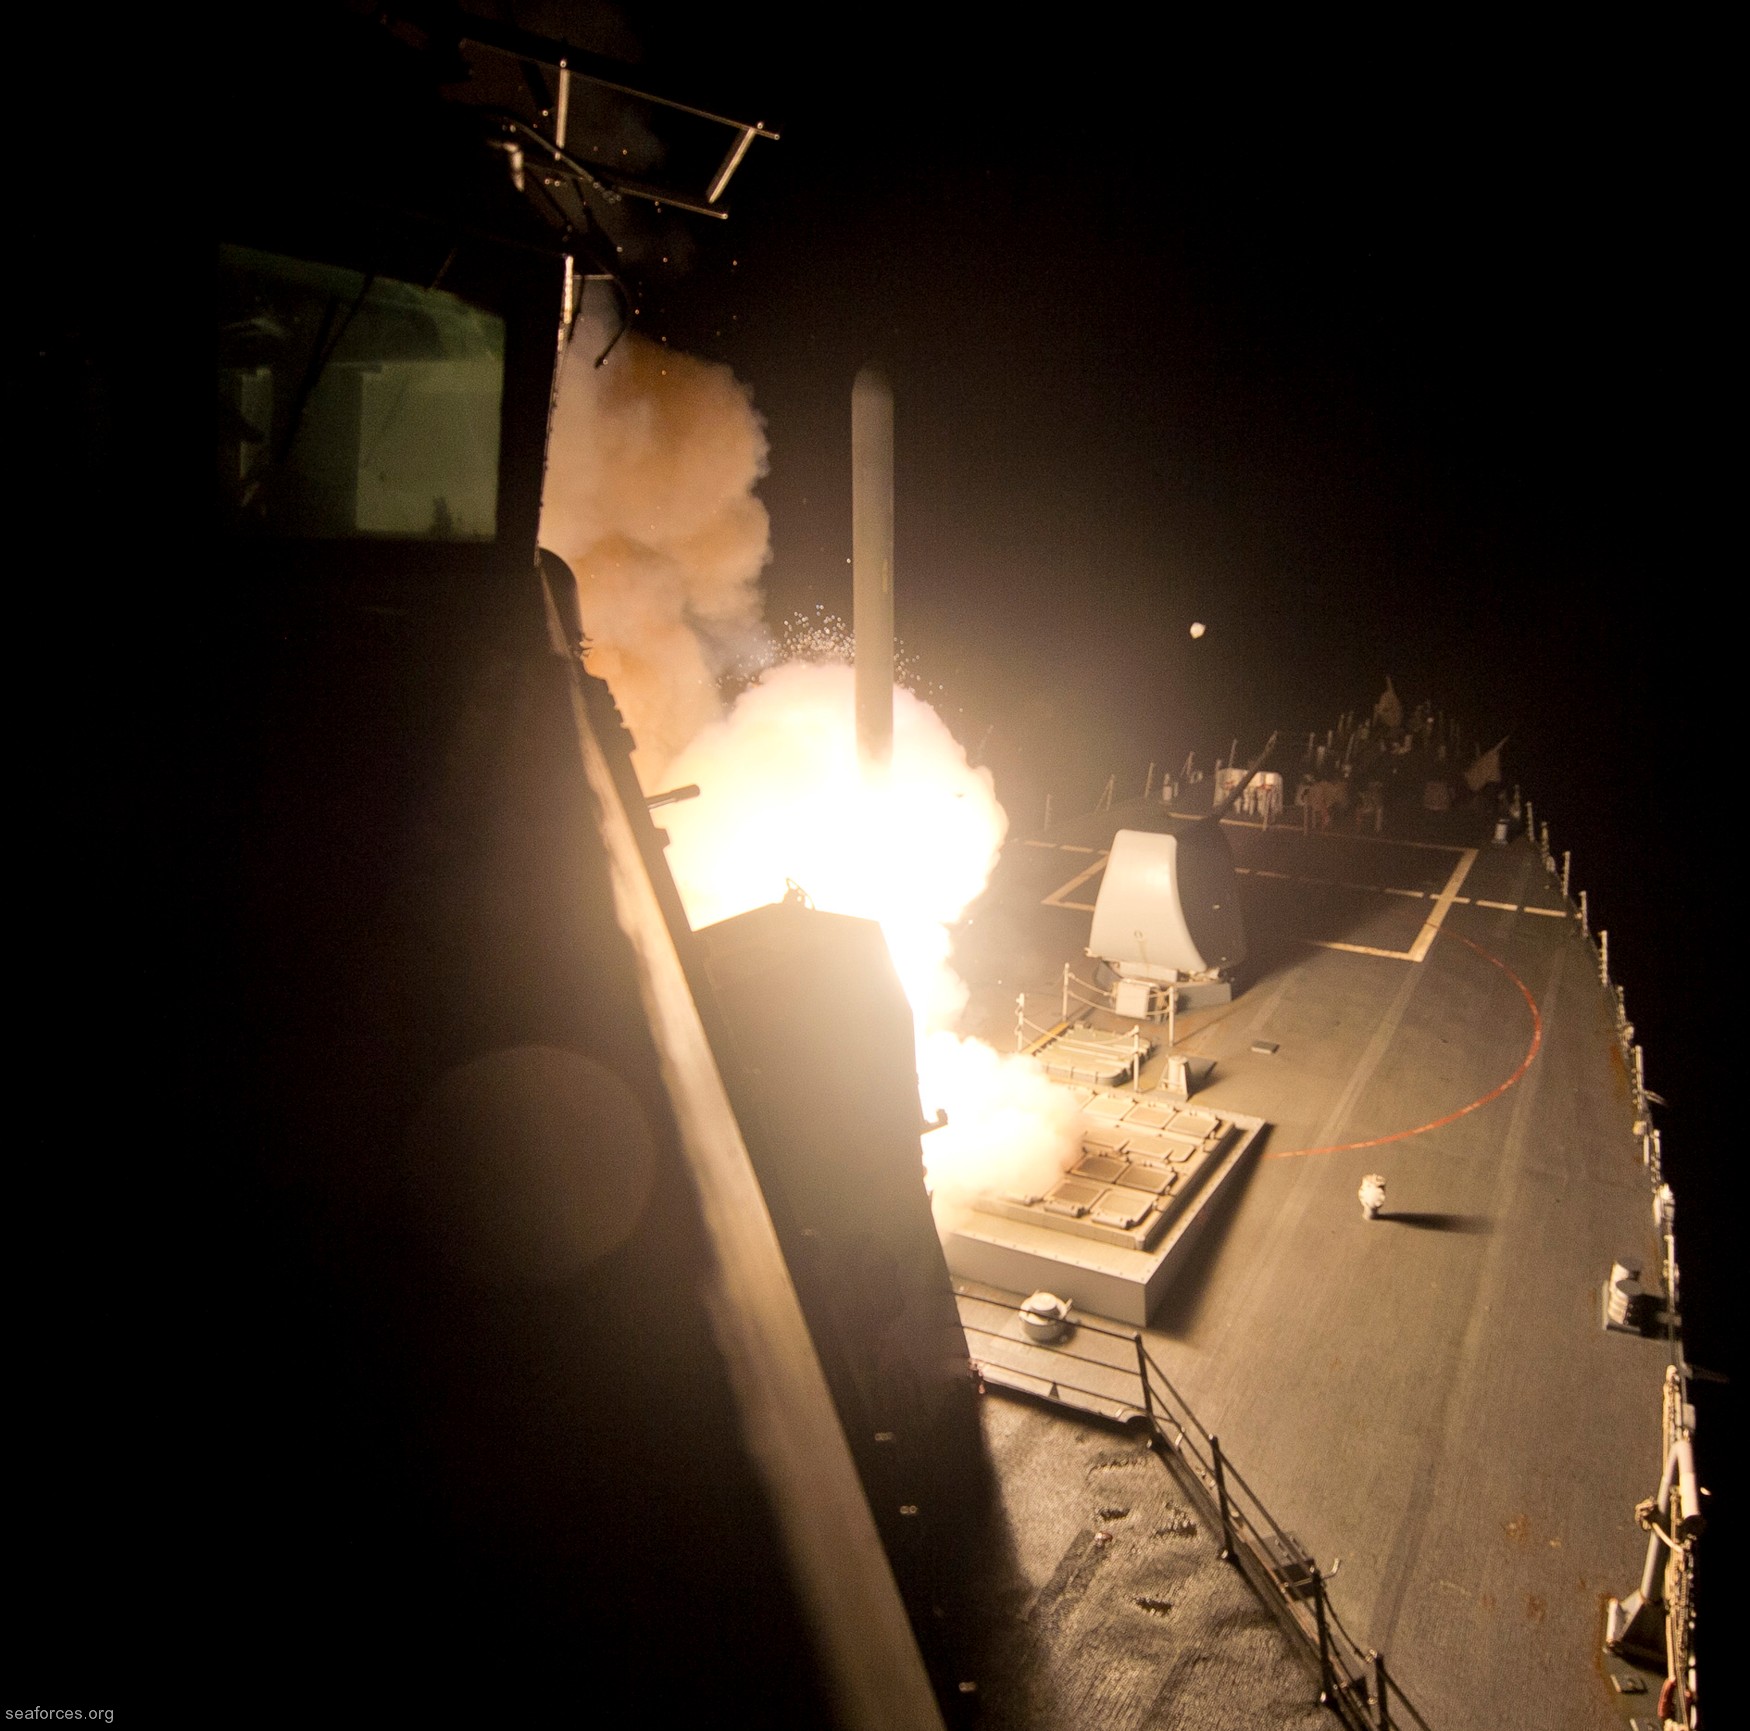 ddg-51 uss arleigh burke destroyer us navy 21 tomahawk tlam missile